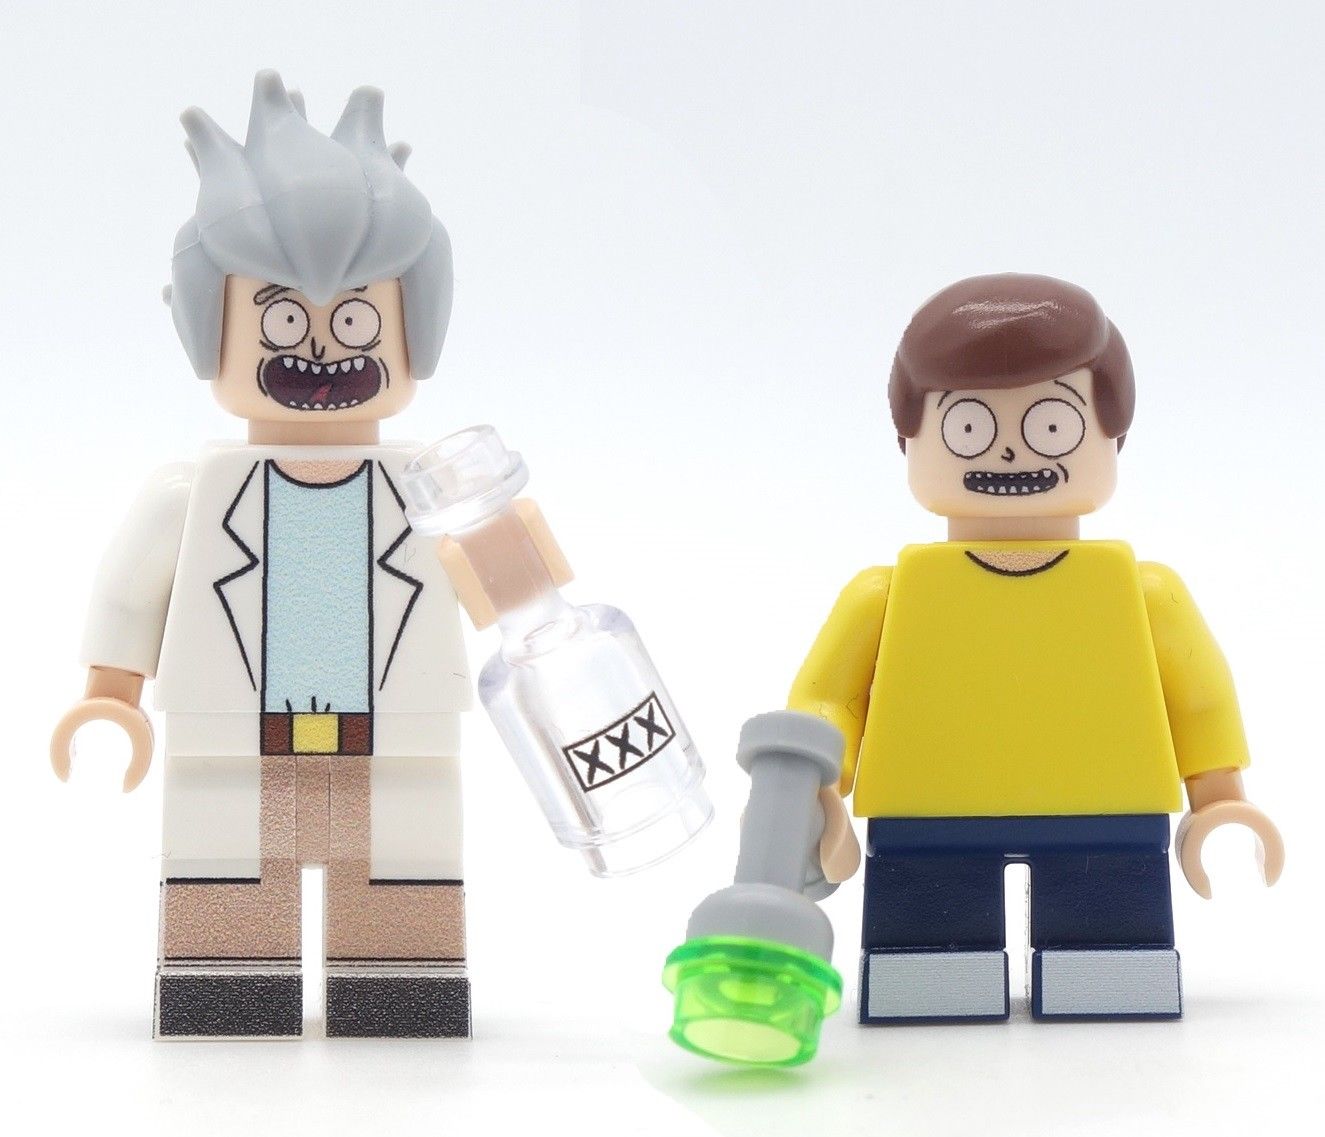 Rick and Morty custom Minifigures